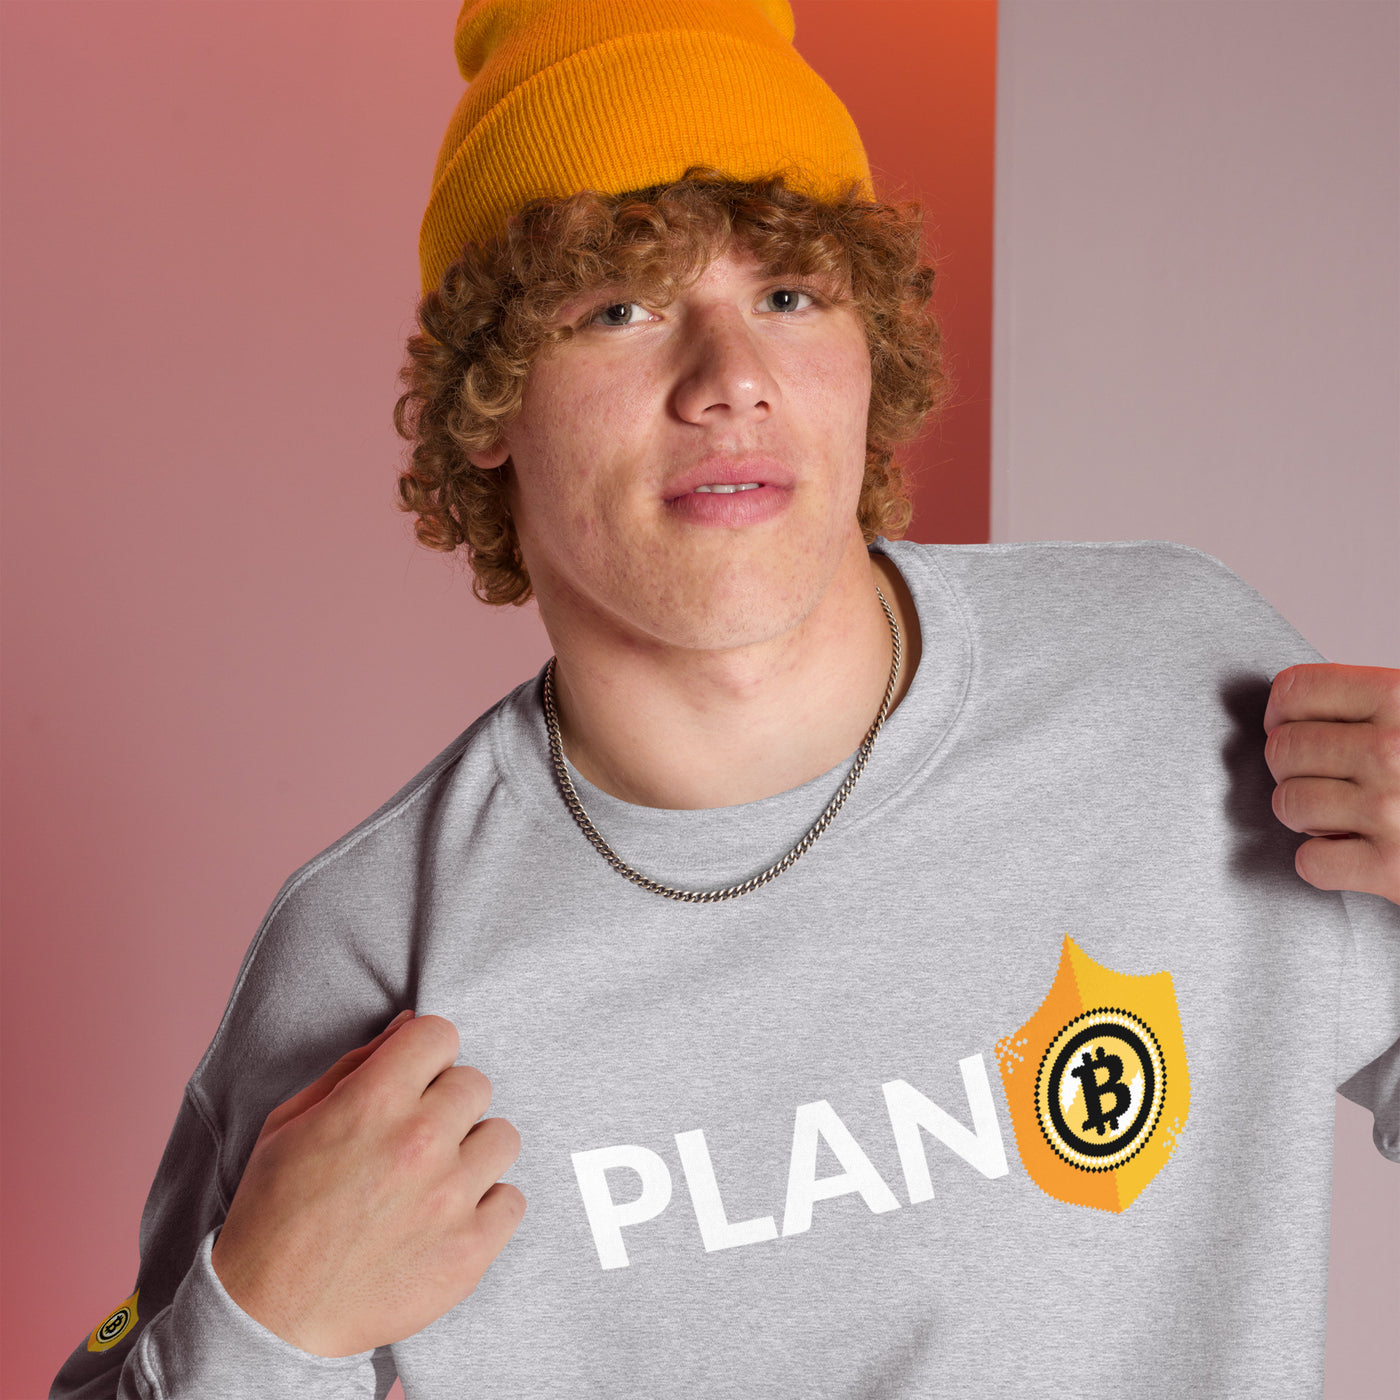 Plan Bitcoin v2 - Unisex Sweatshirt